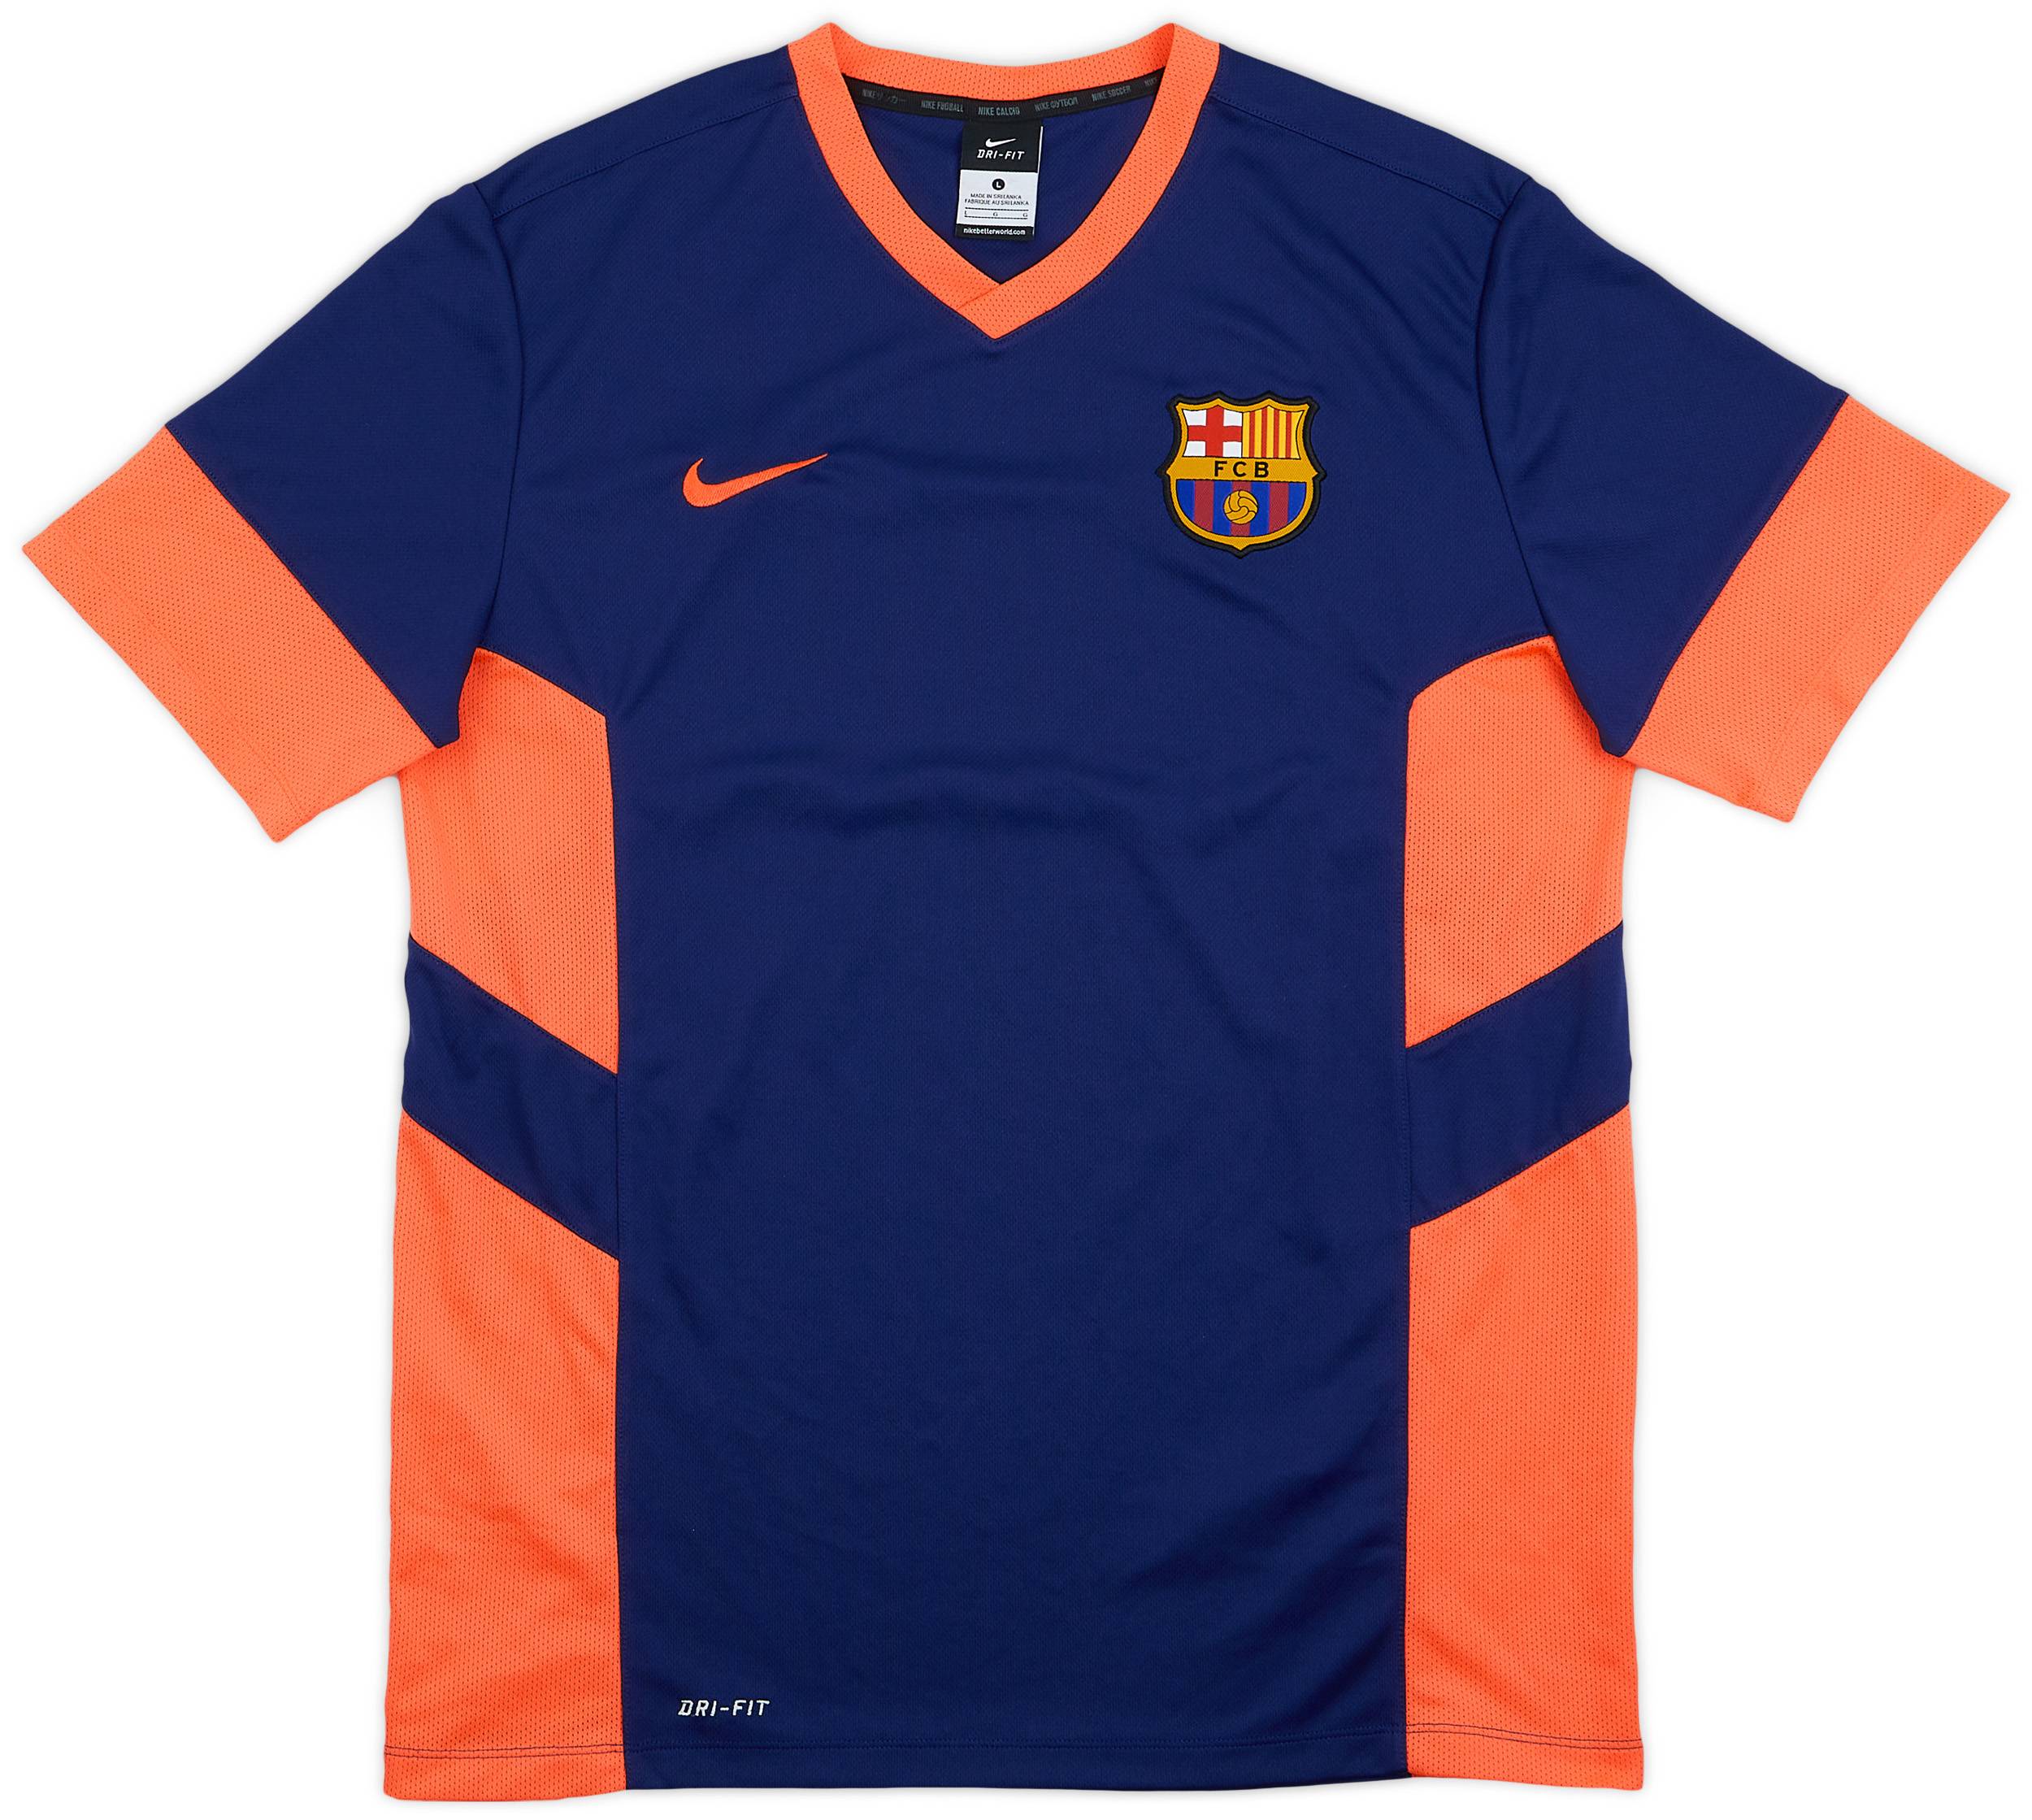 2014-15 Barcelona Nike Training Shirt - 9/10 - (L)